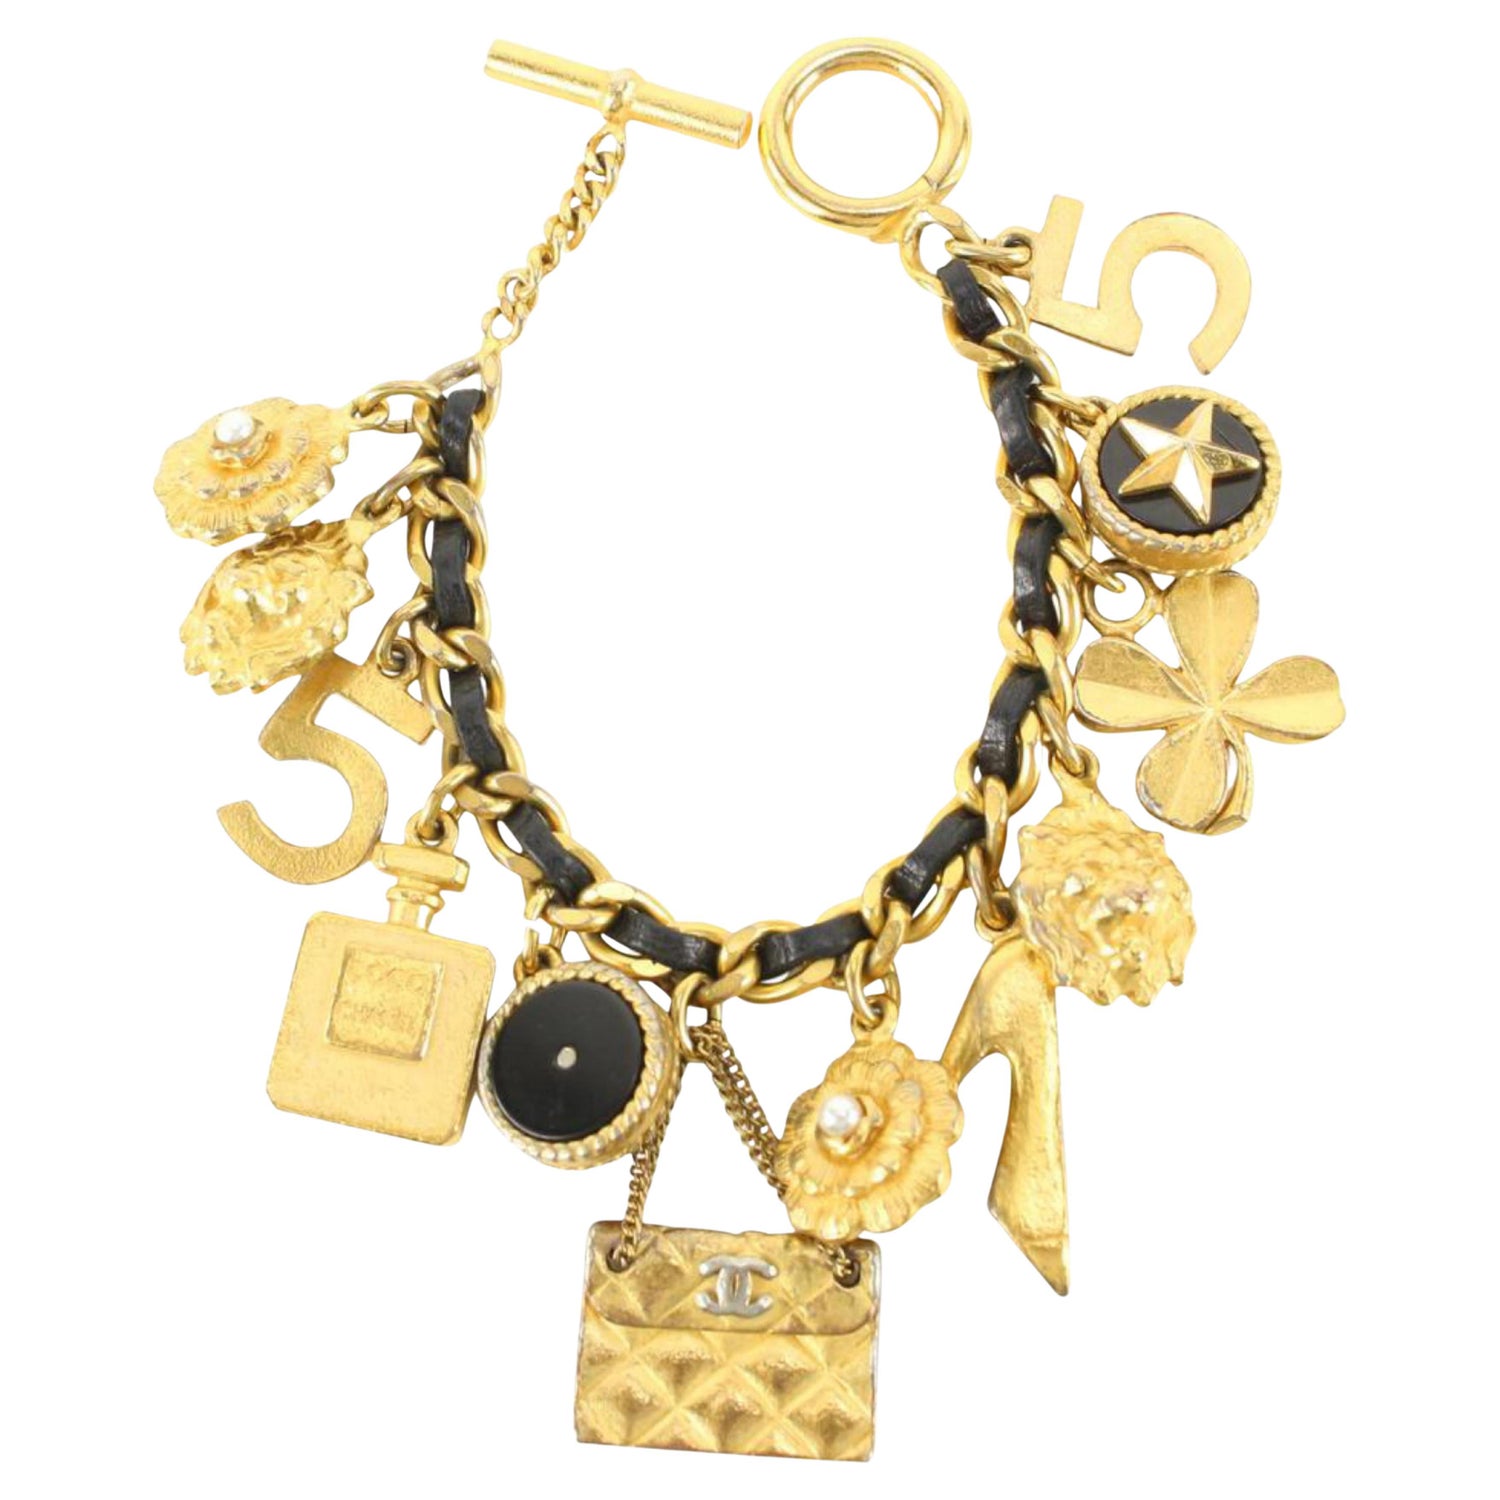 Rare Charm Bracelet - 2 For Sale on 1stDibs | anne klein shoes, anne klein  watch, links of london gold bracelet